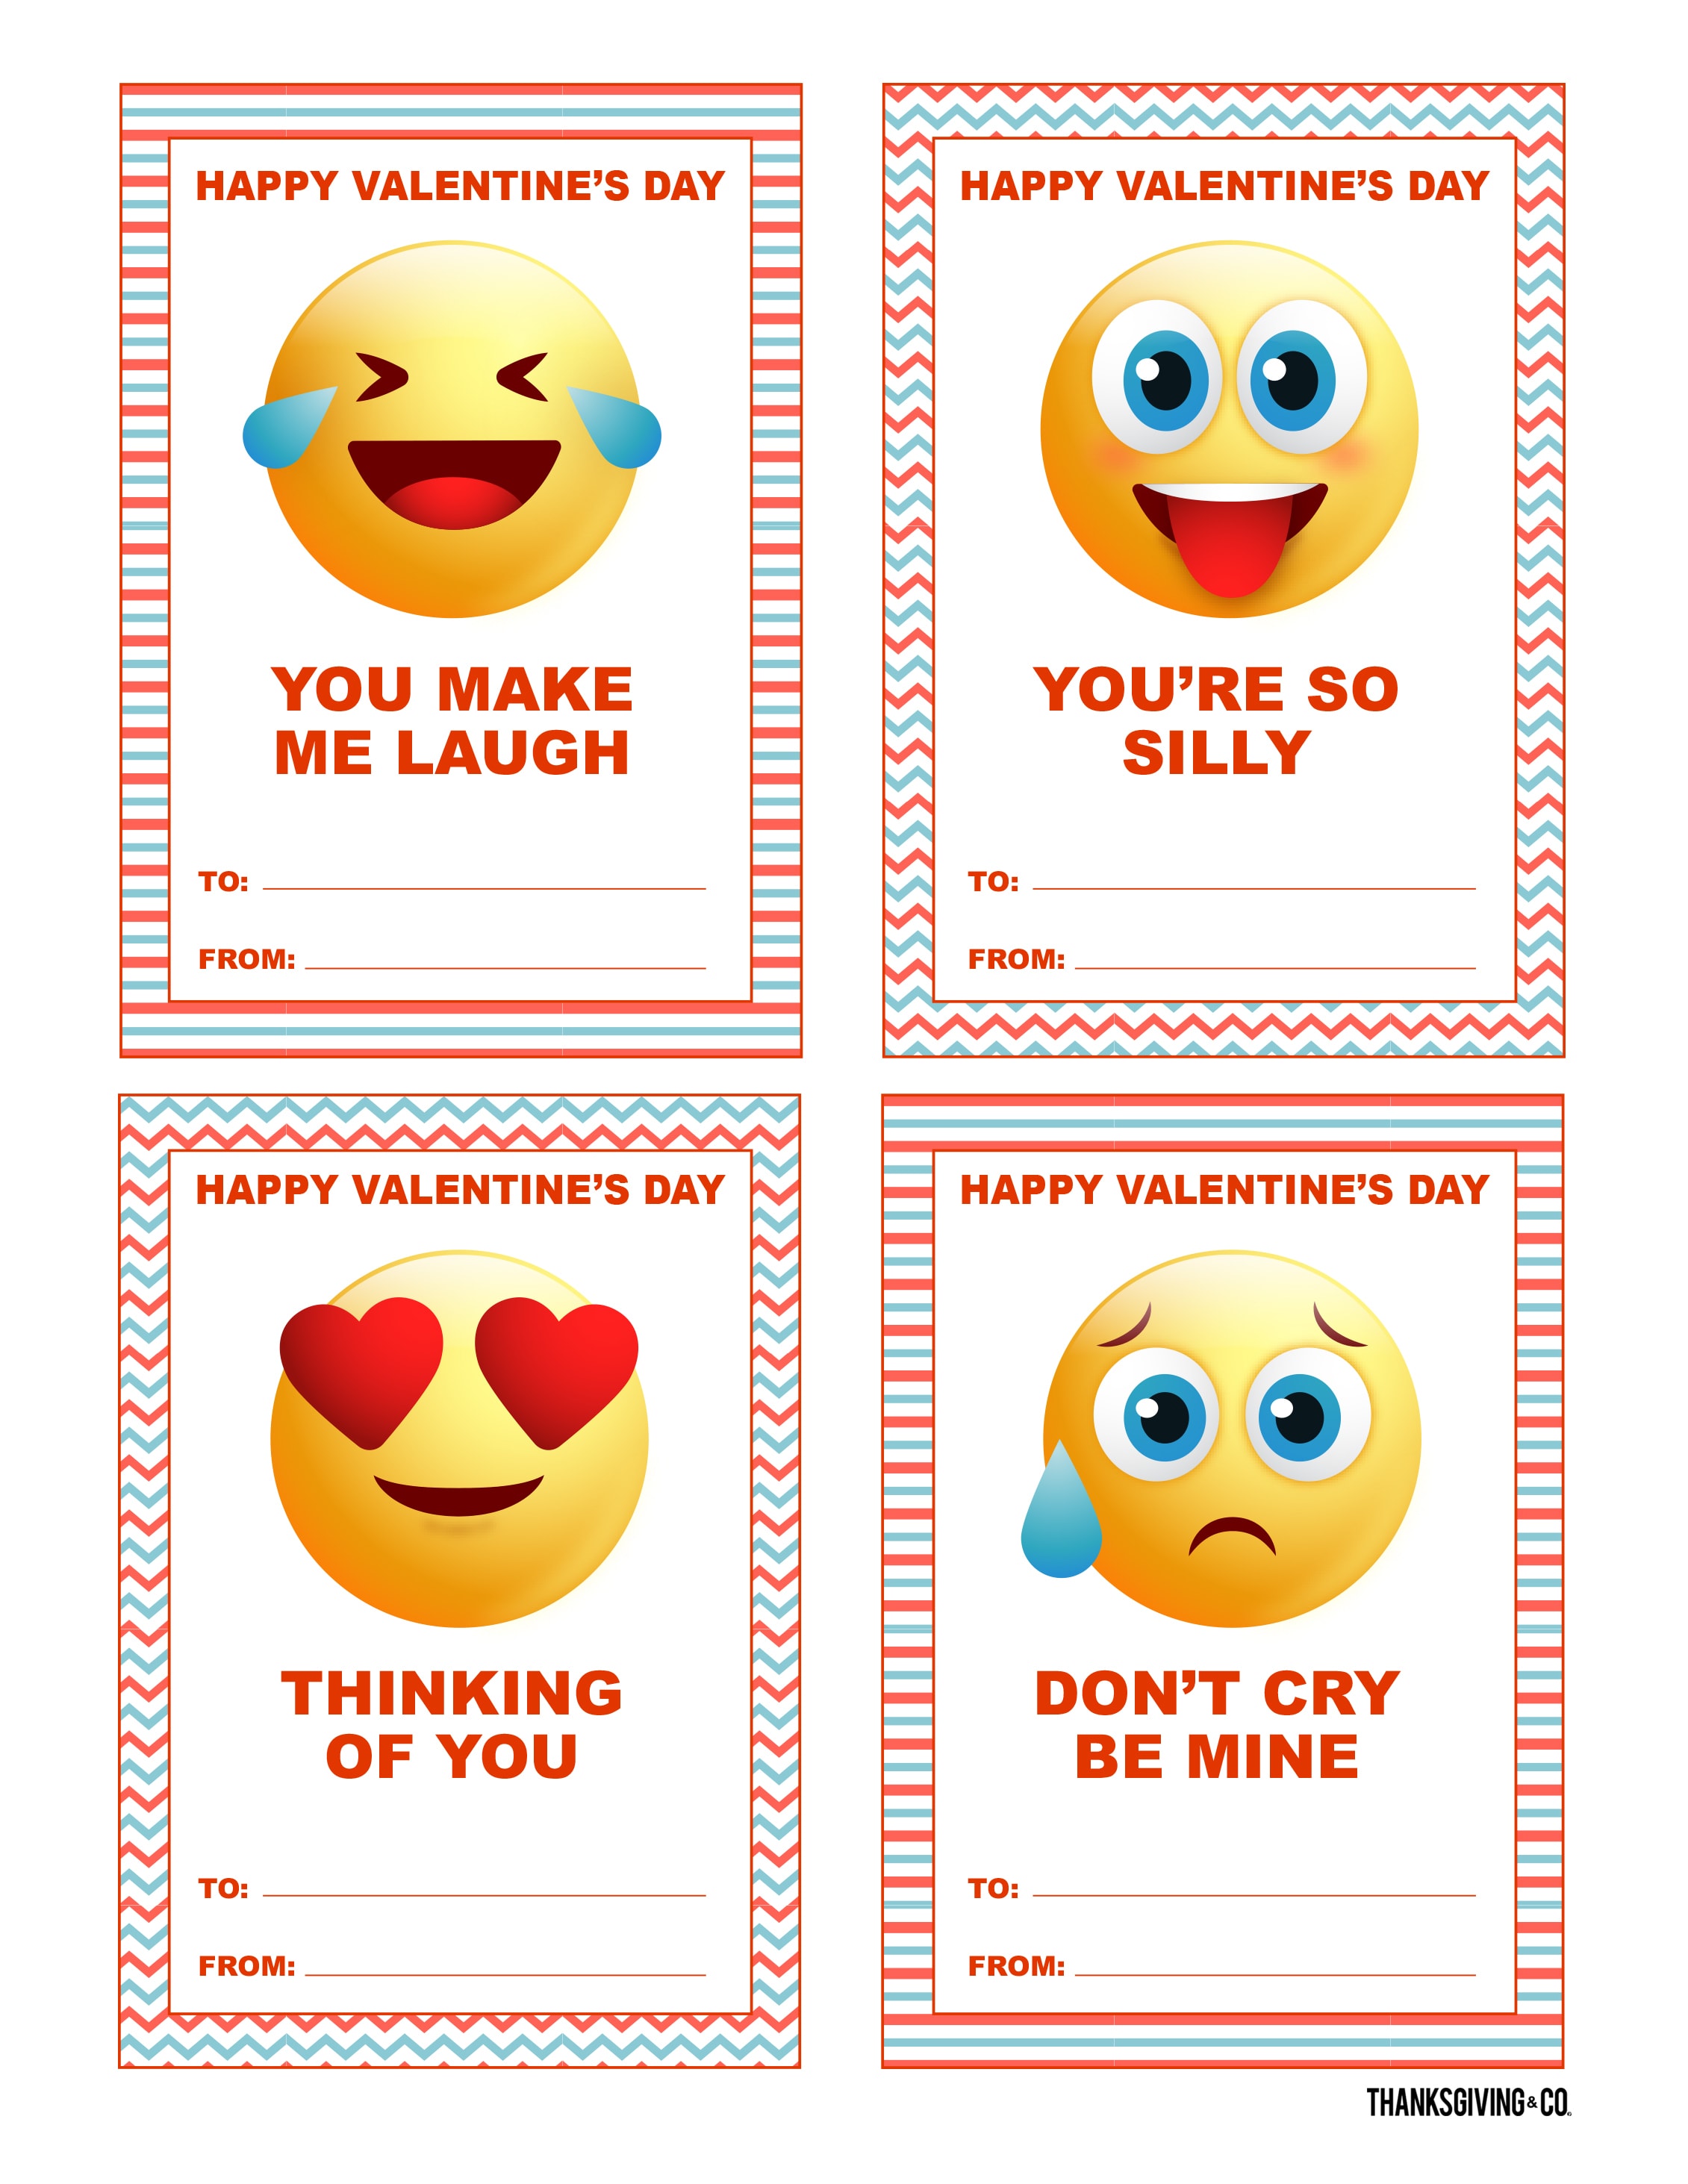 Emoji School Valentine Cards Ubicaciondepersonas cdmx gob mx